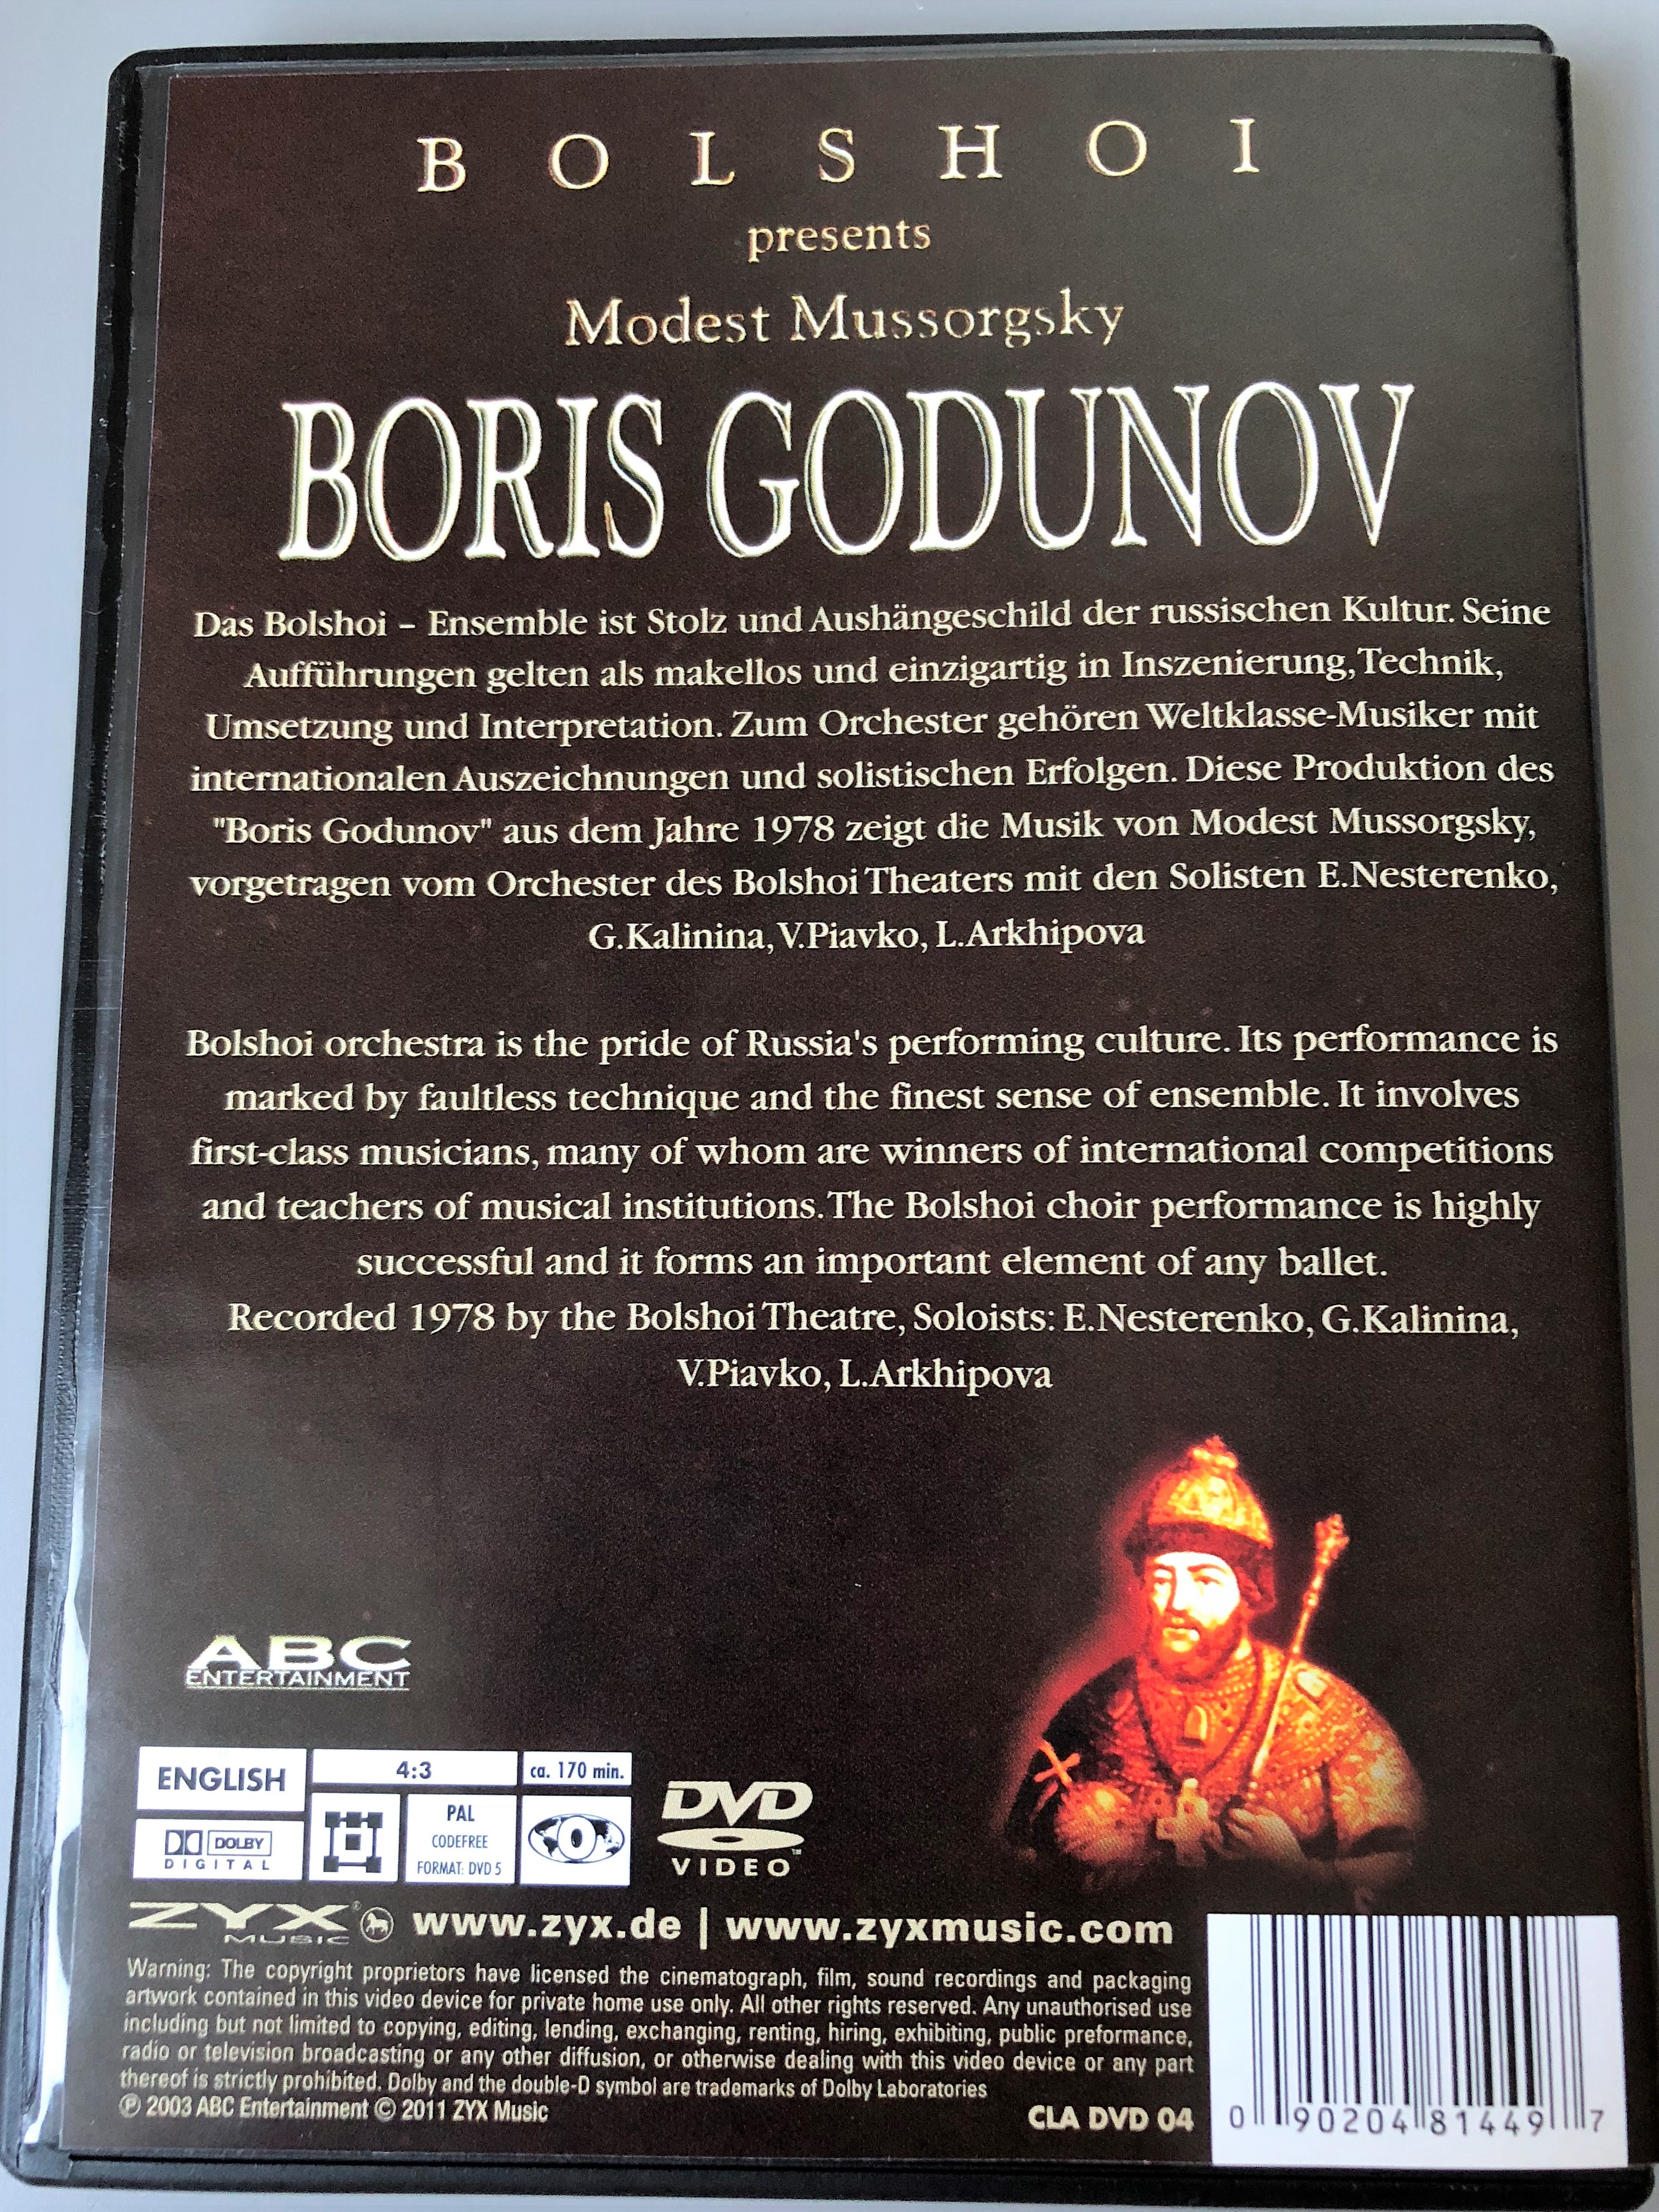 Bolshoi presents Modest Mussorgsky - Boris Godunov DVD 1978 / Болшои Театр  VOL 04 / ABC Entertainment - Zyx Music / CLA DVD 04 - bibleinmylanguage